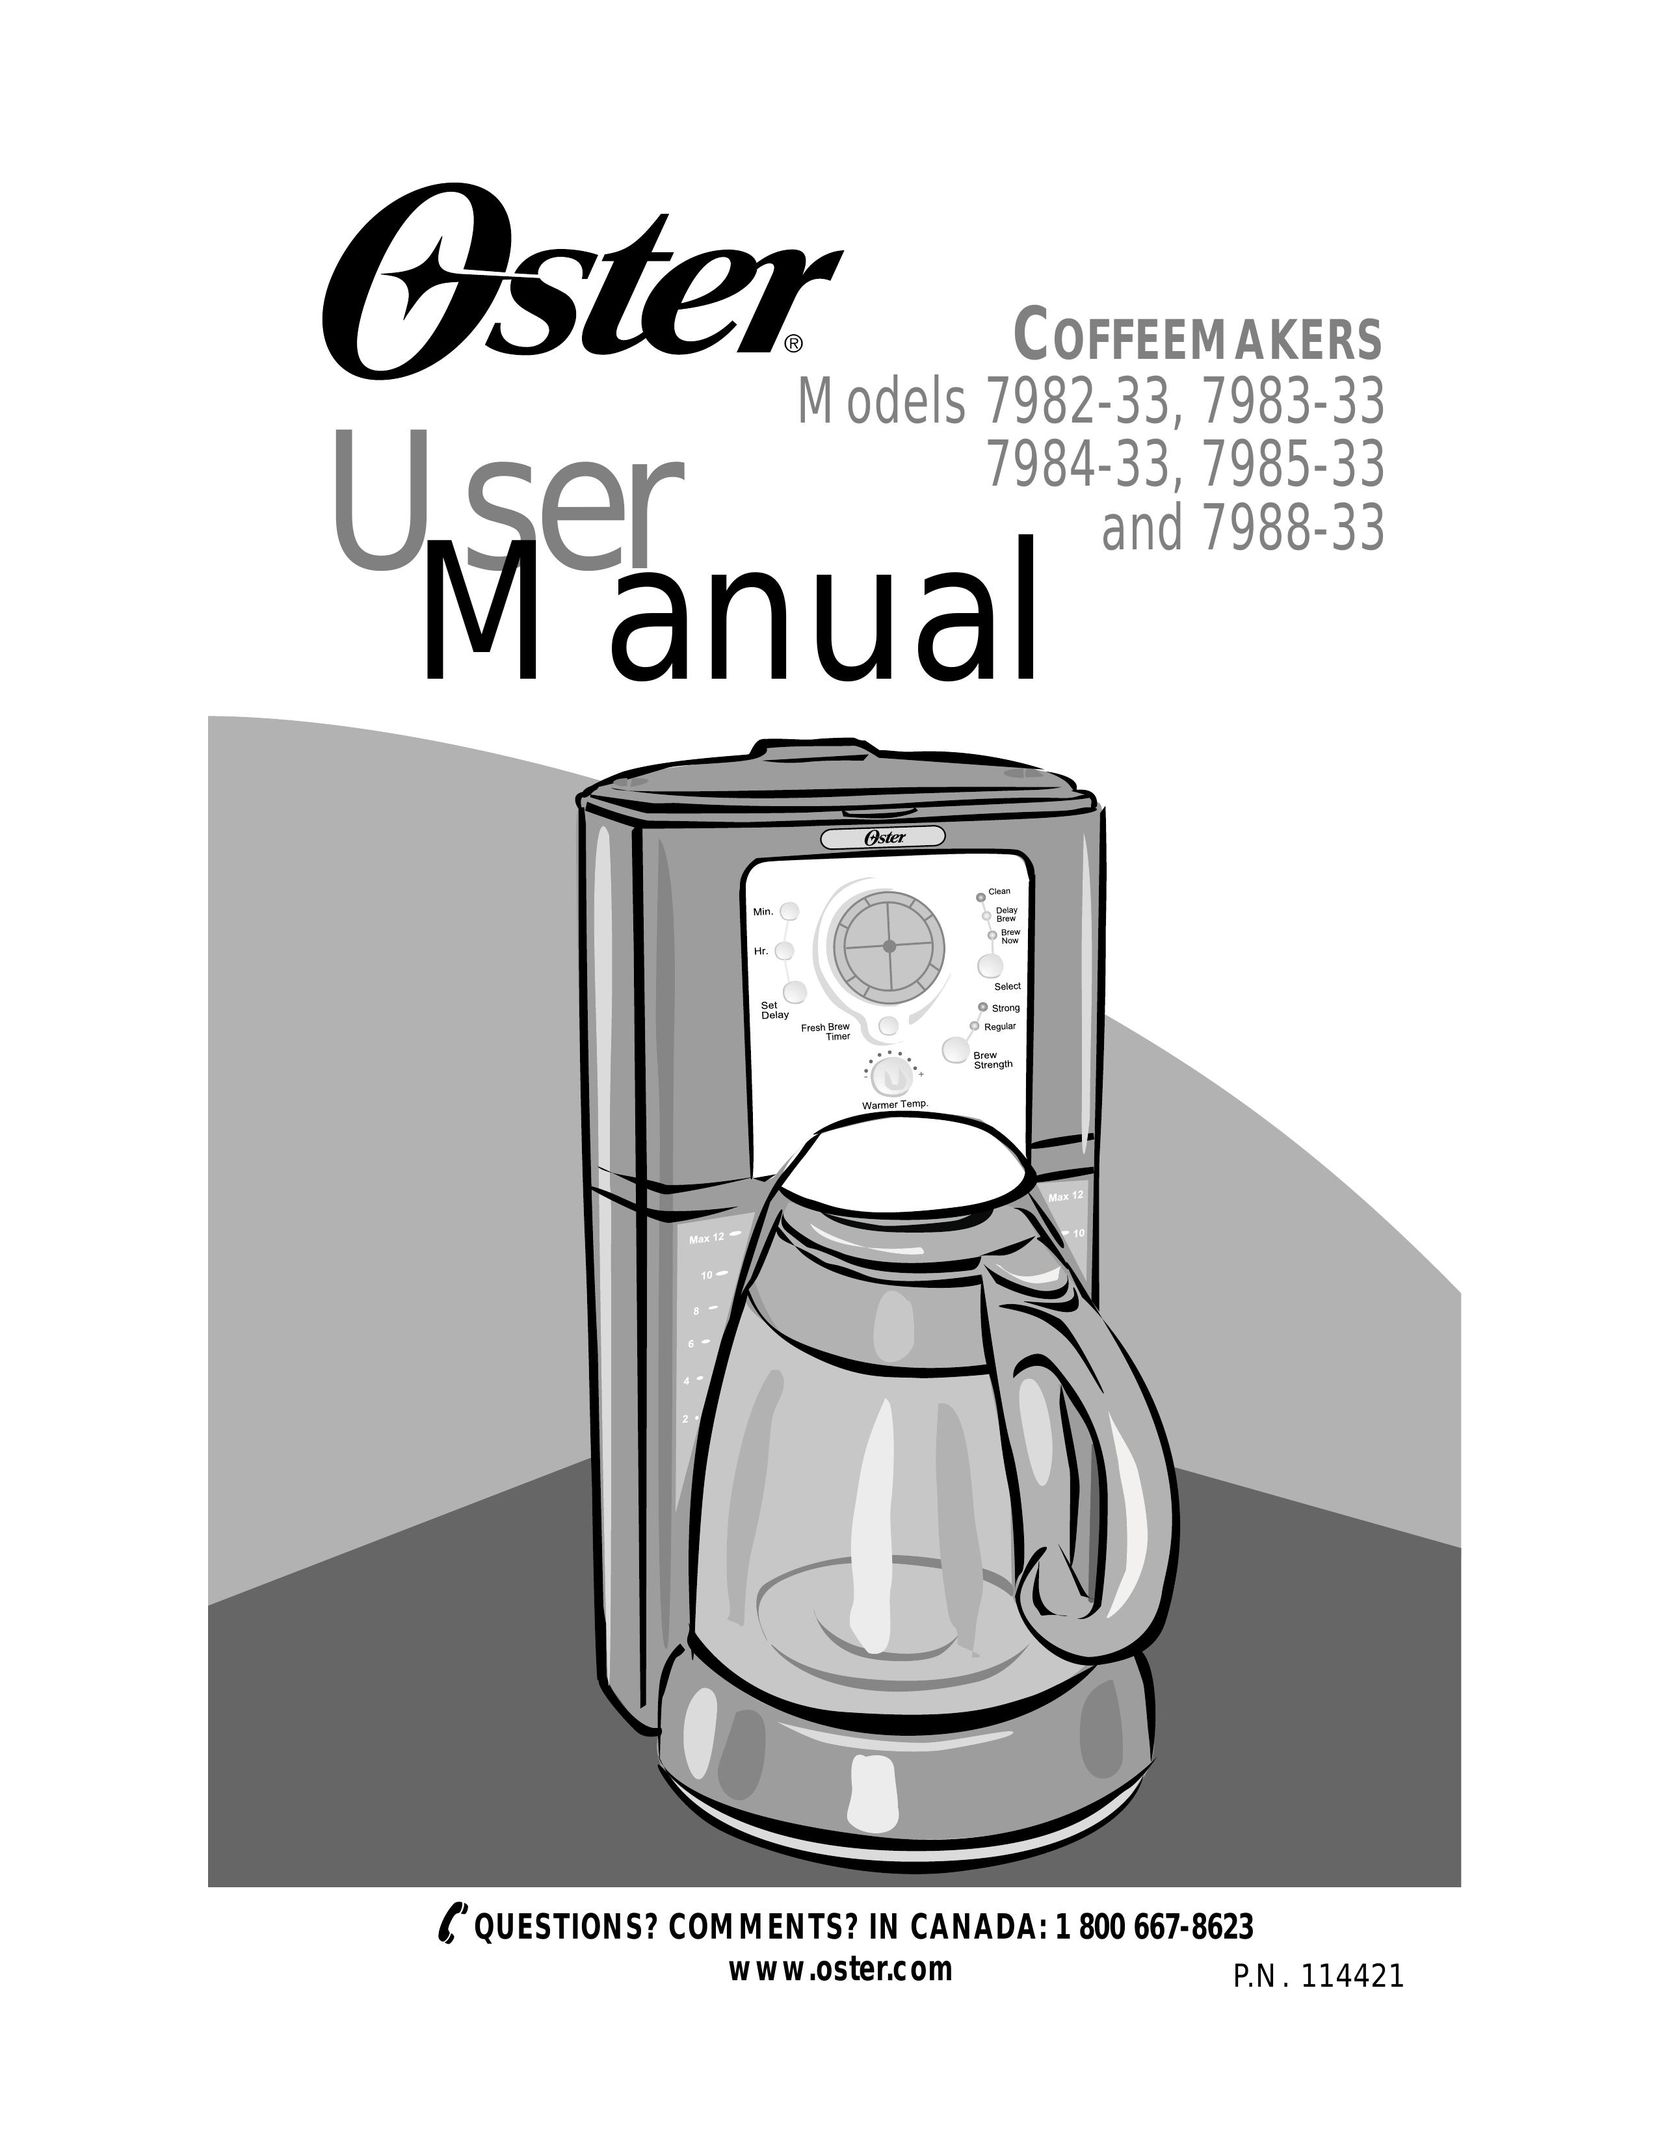 Mr. Coffee 7988-33 Coffeemaker User Manual